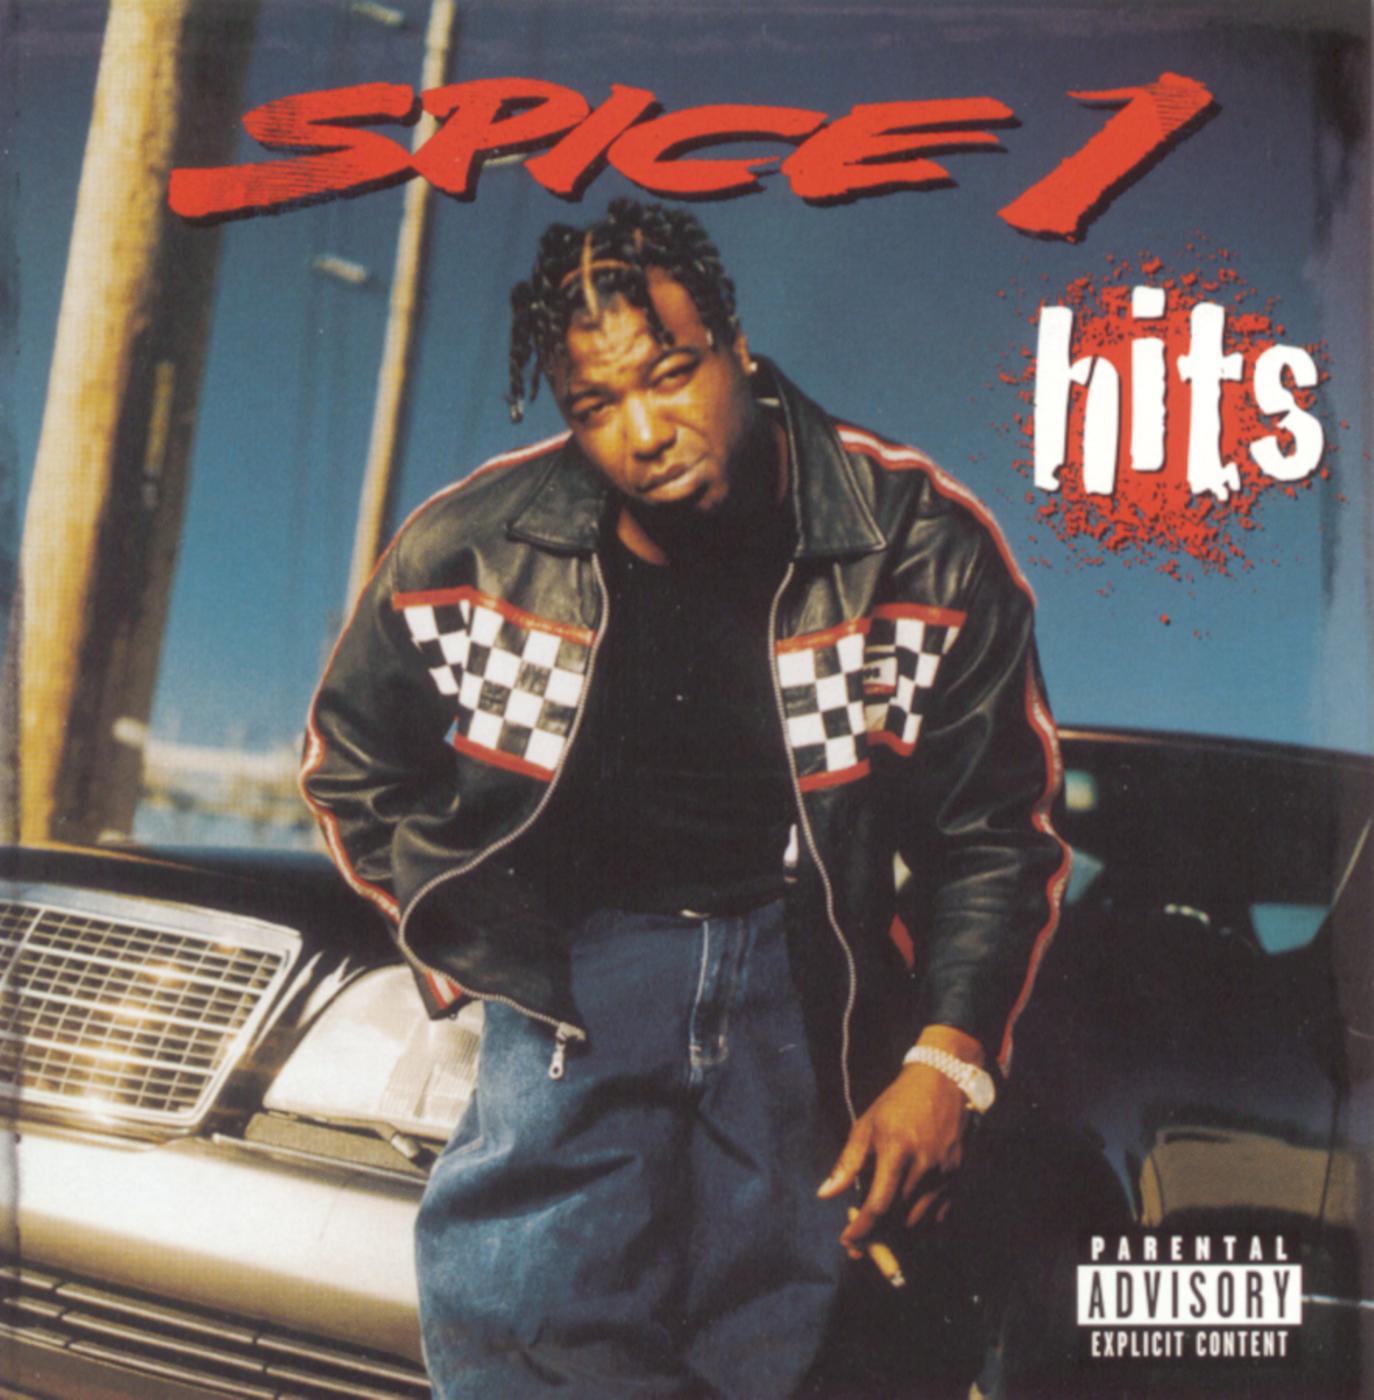 Spice 1 featuring Method Man - Hard To Kill